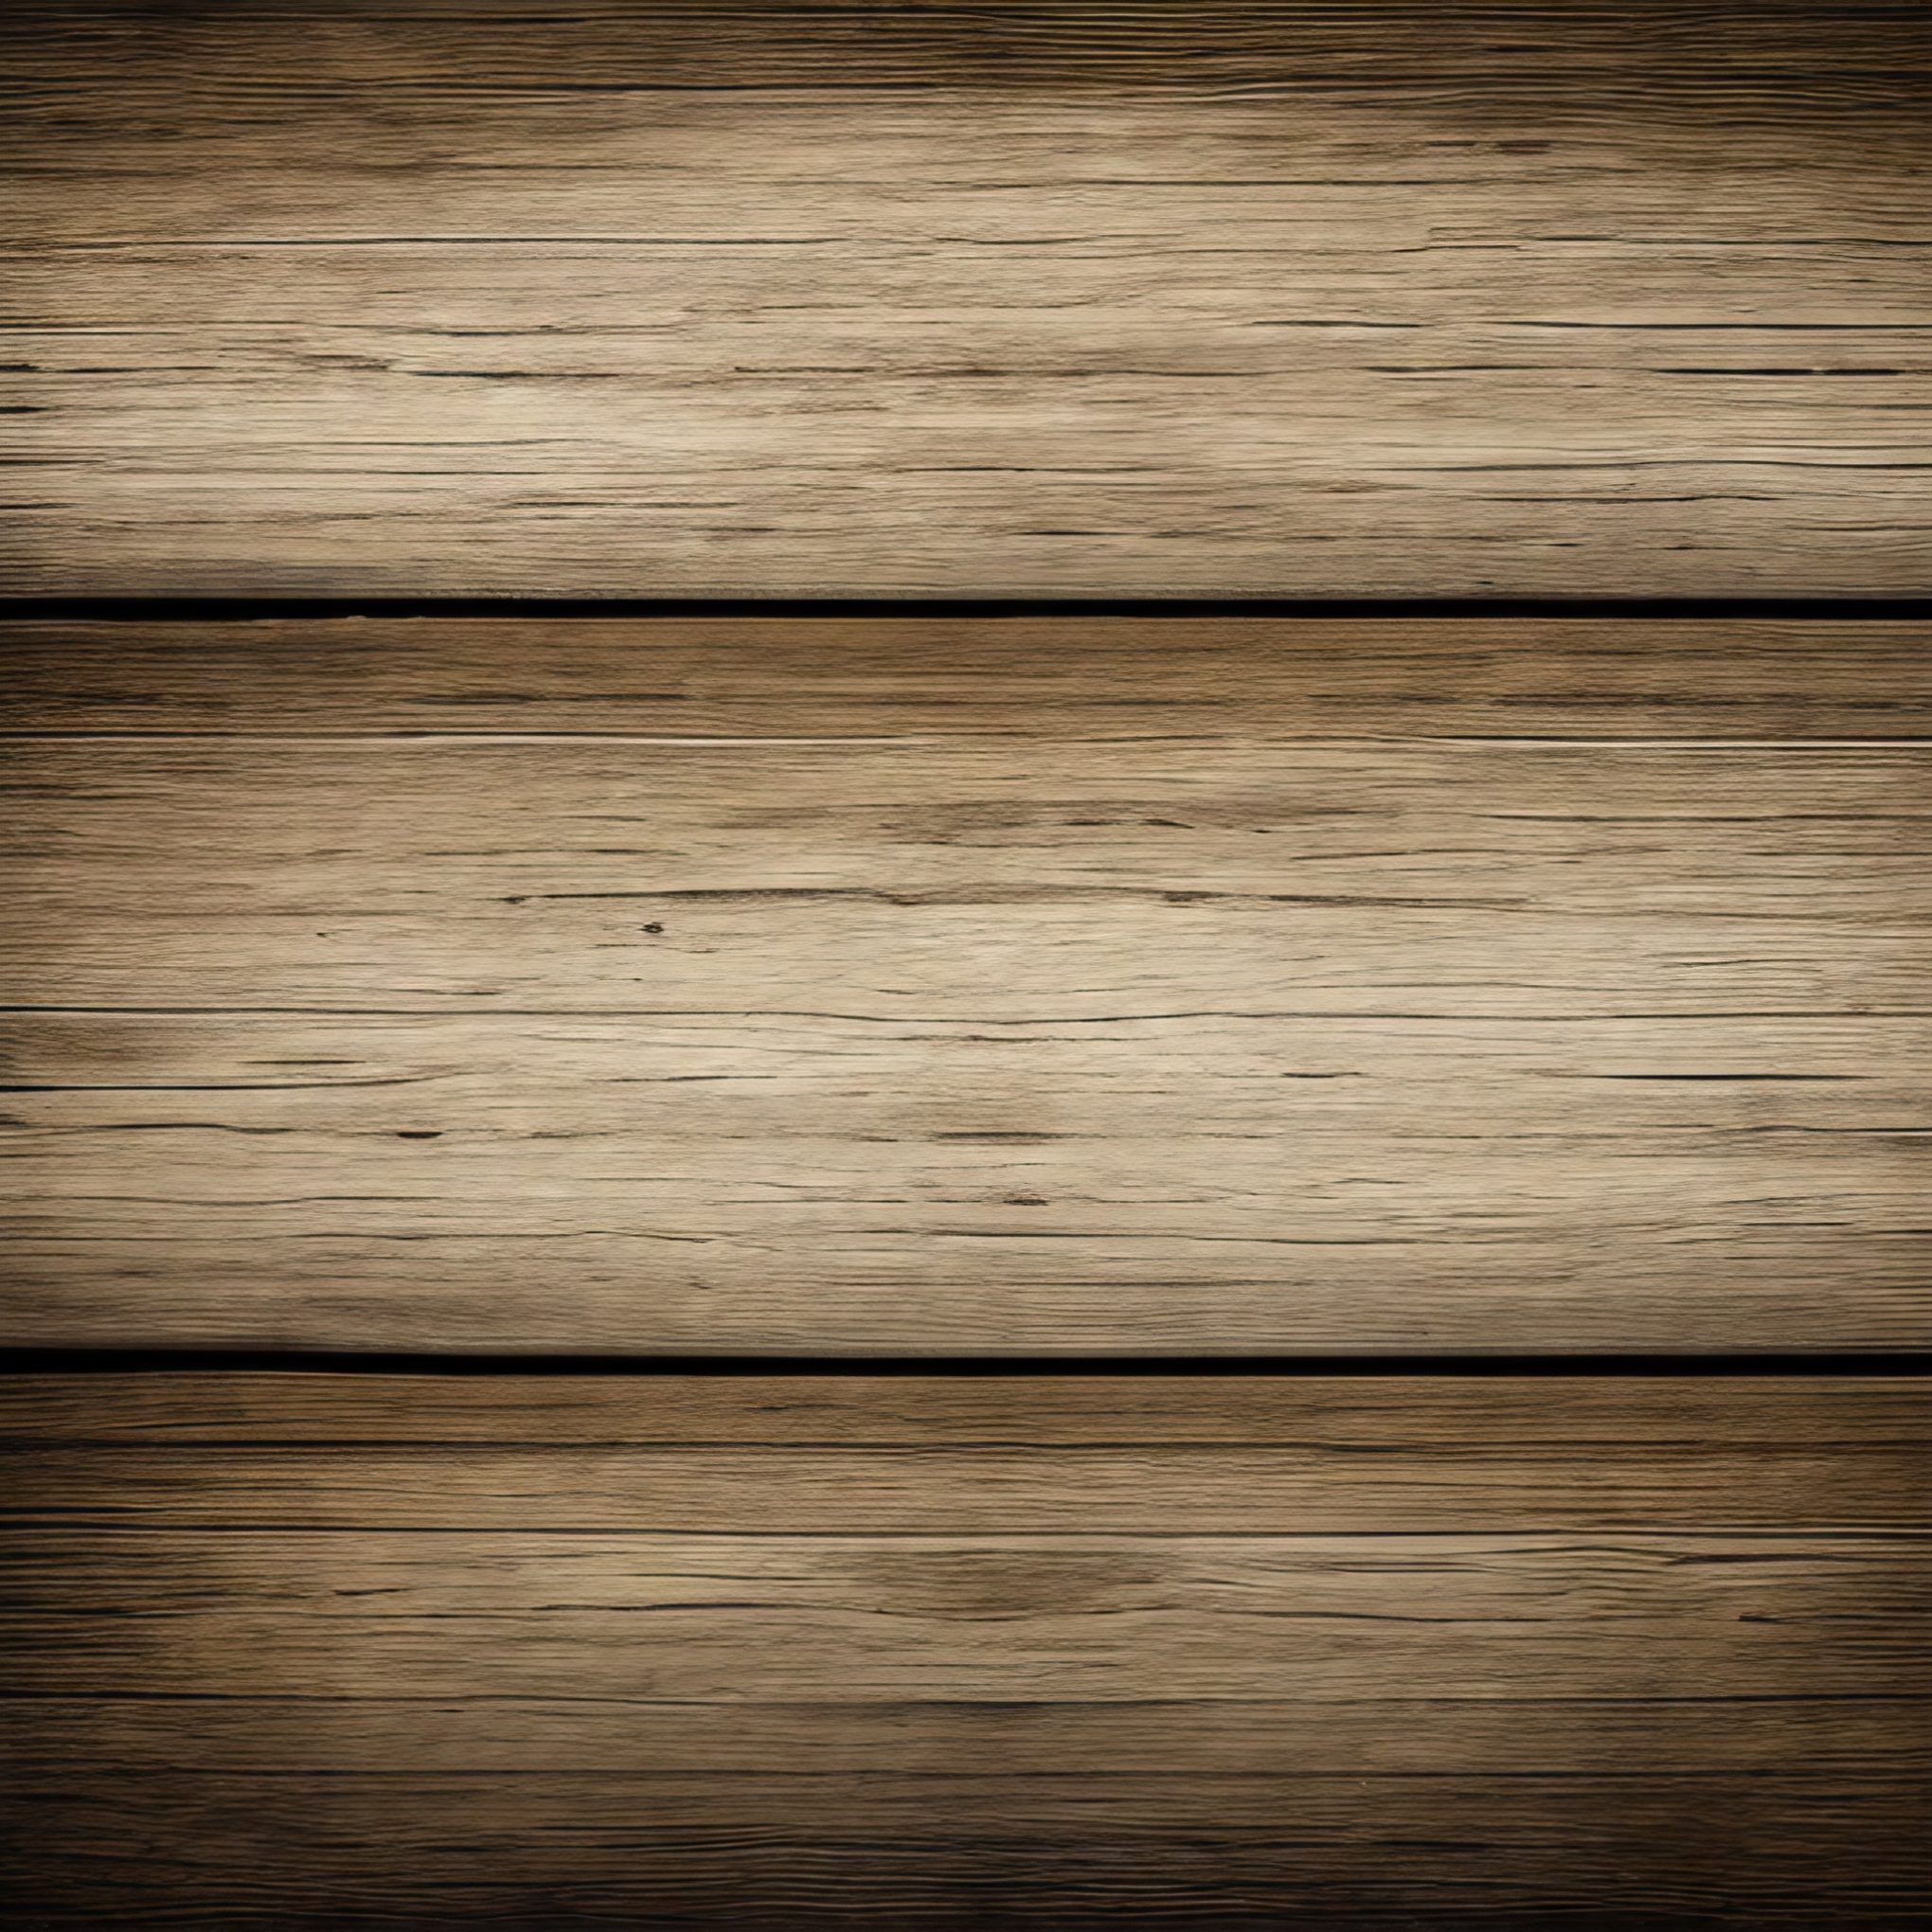 Grey Oak Floorboards Close Up Stock Image